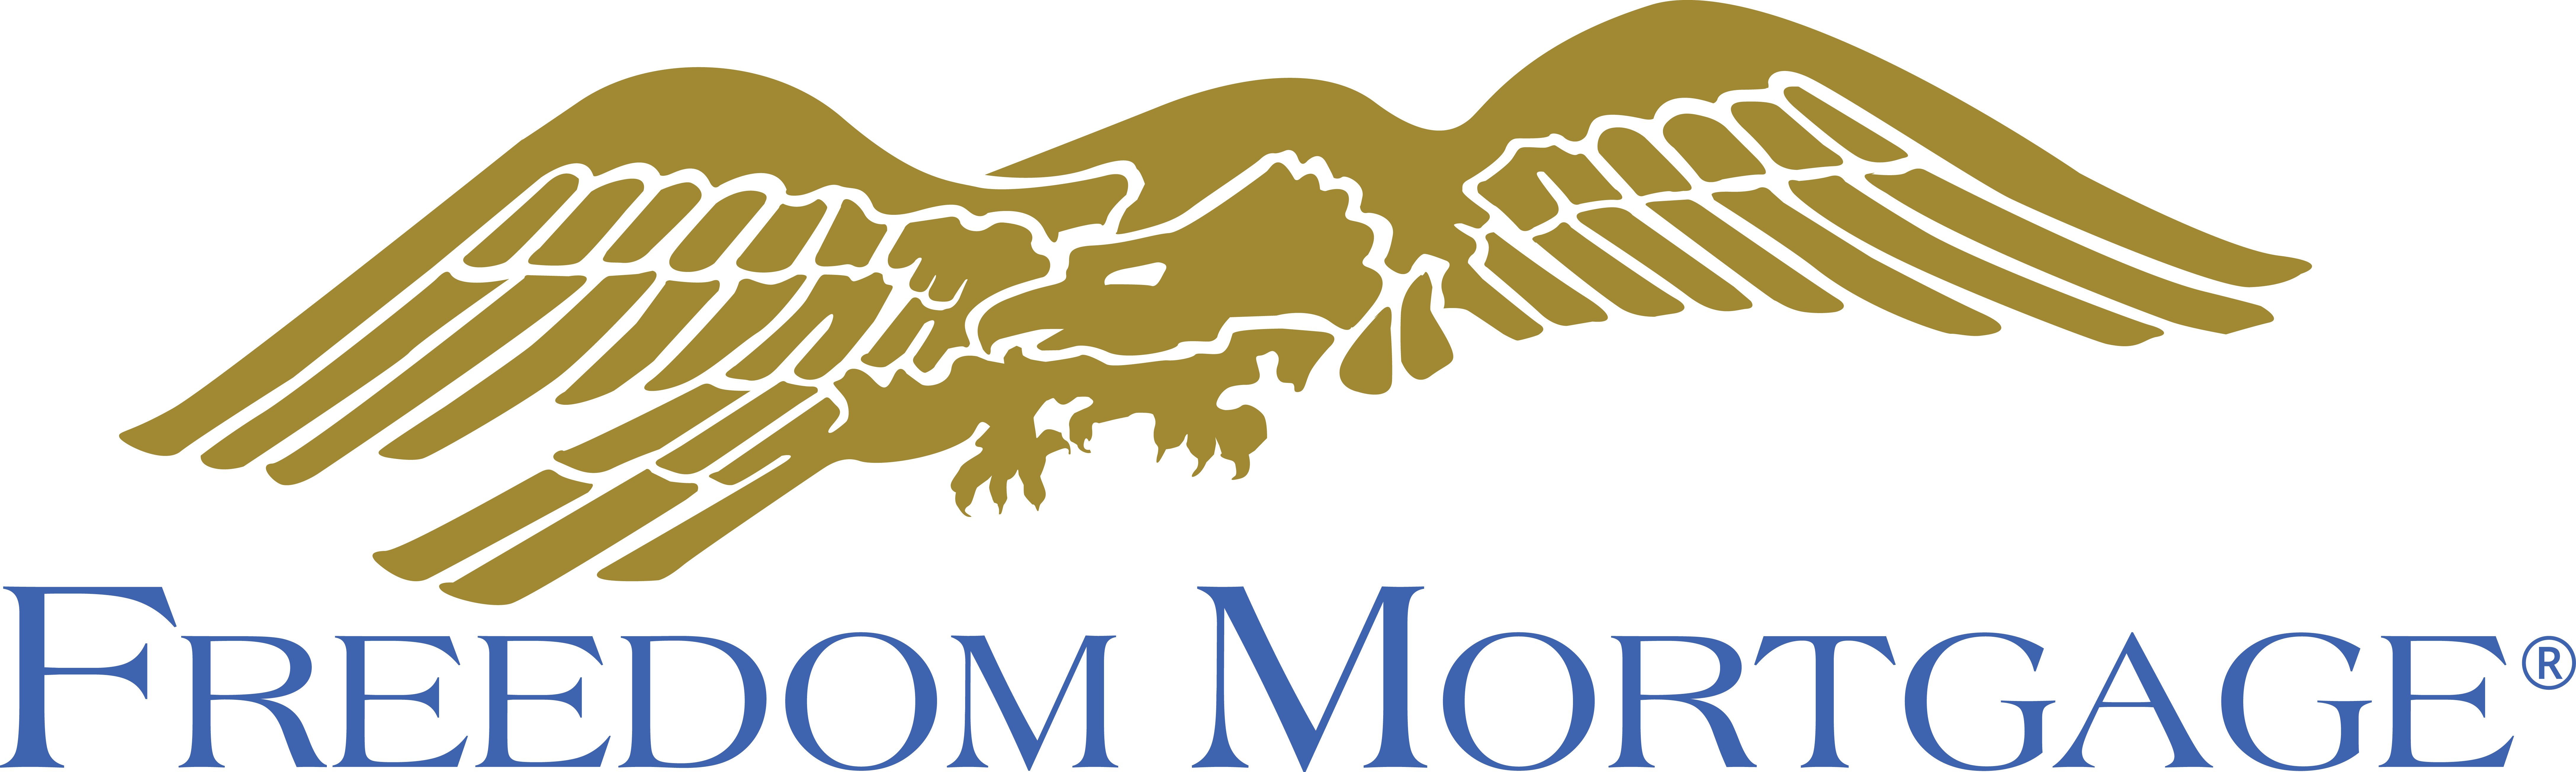 Freedom Mortgage Corporation logo